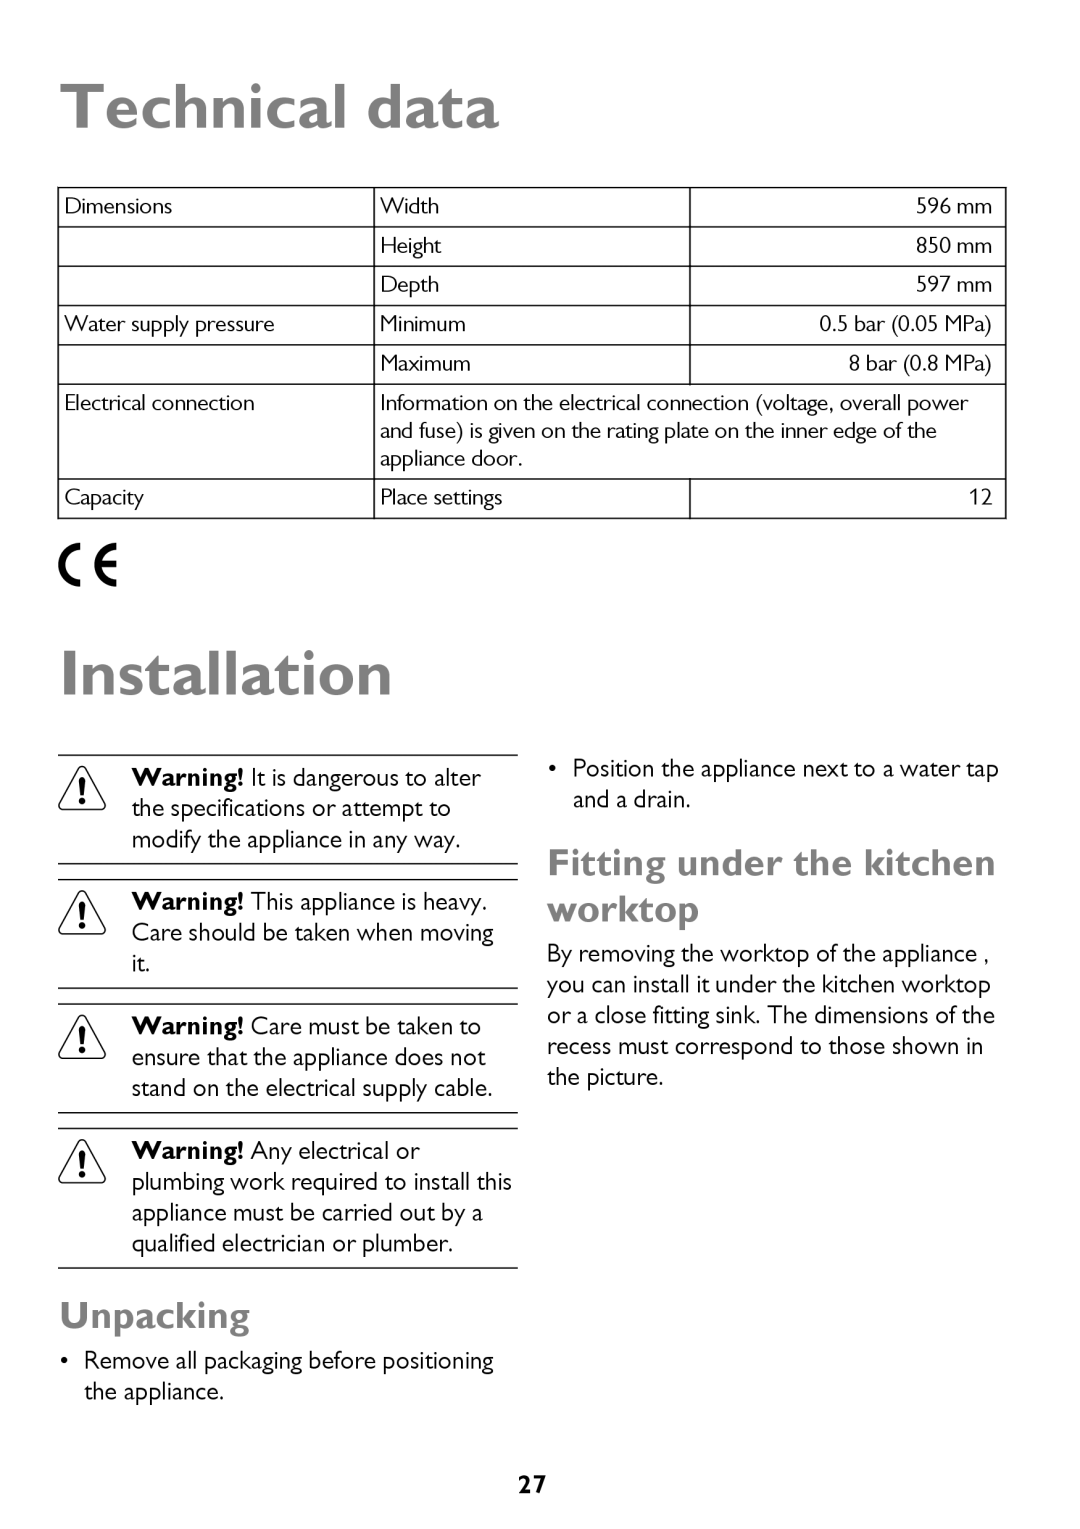 John Lewis JLDW 1221 instruction manual Technical data, Installation, Unpacking, Fitting under the kitchen worktop 